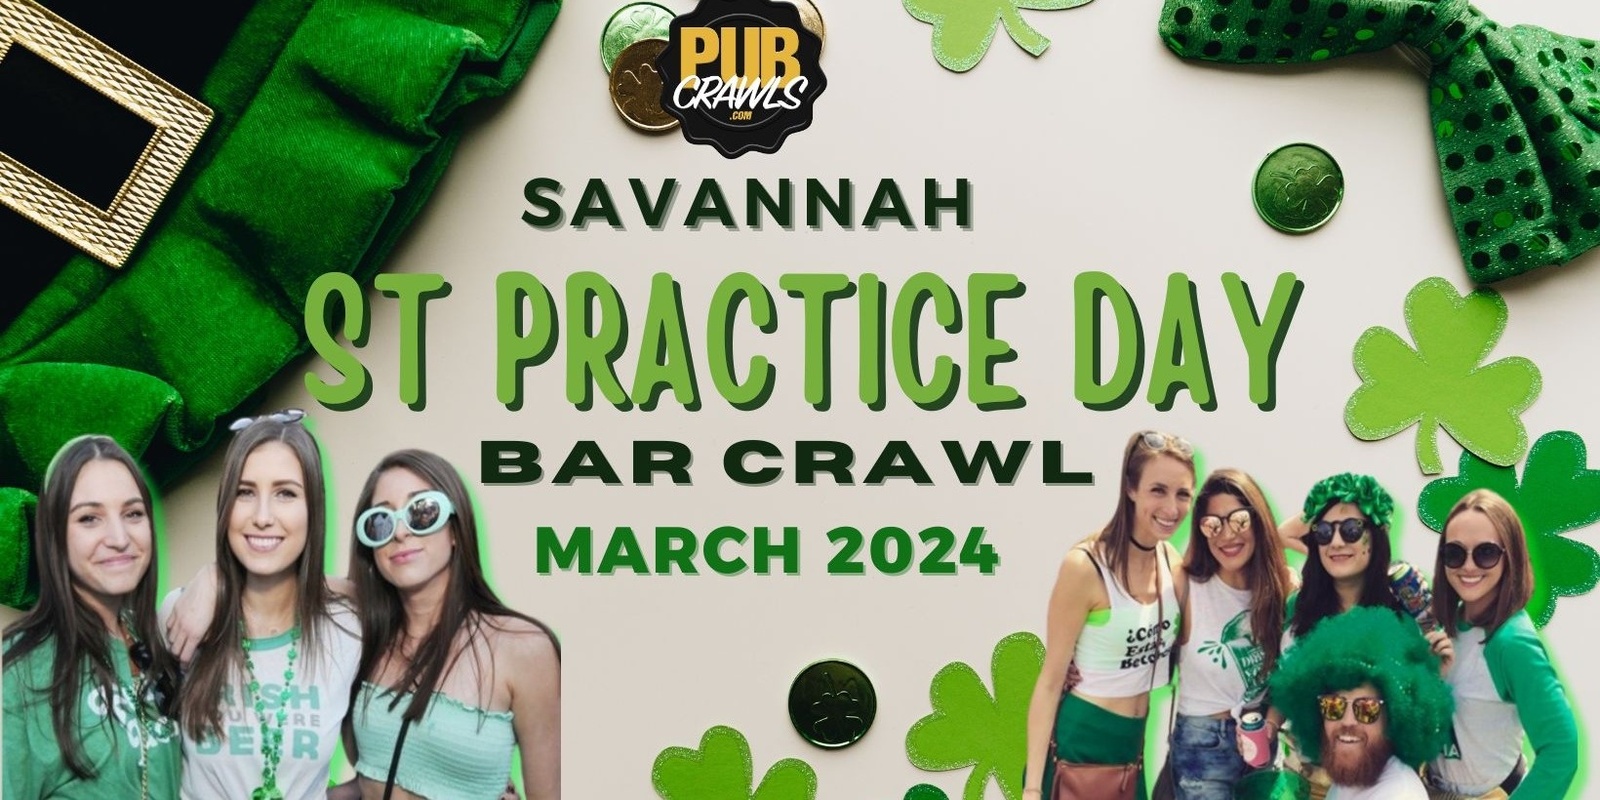 Banner image for Savannah St Practice Day Bar Crawl - St Patrick's Day Celebration